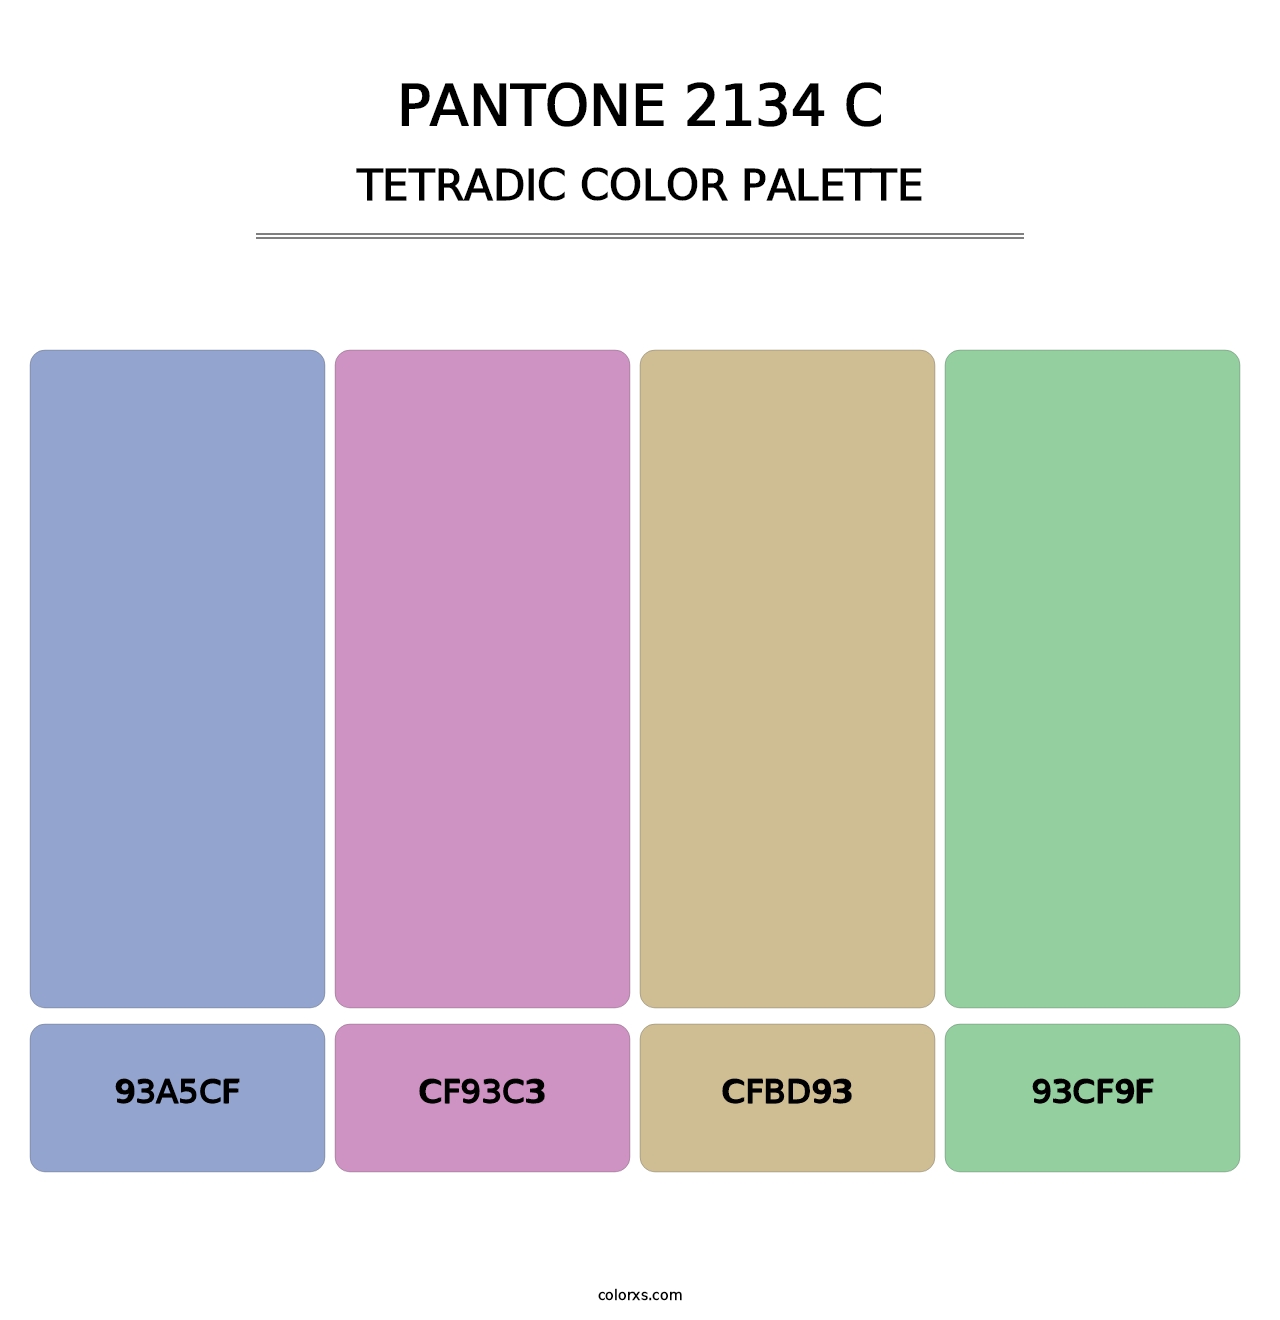 PANTONE 2134 C - Tetradic Color Palette